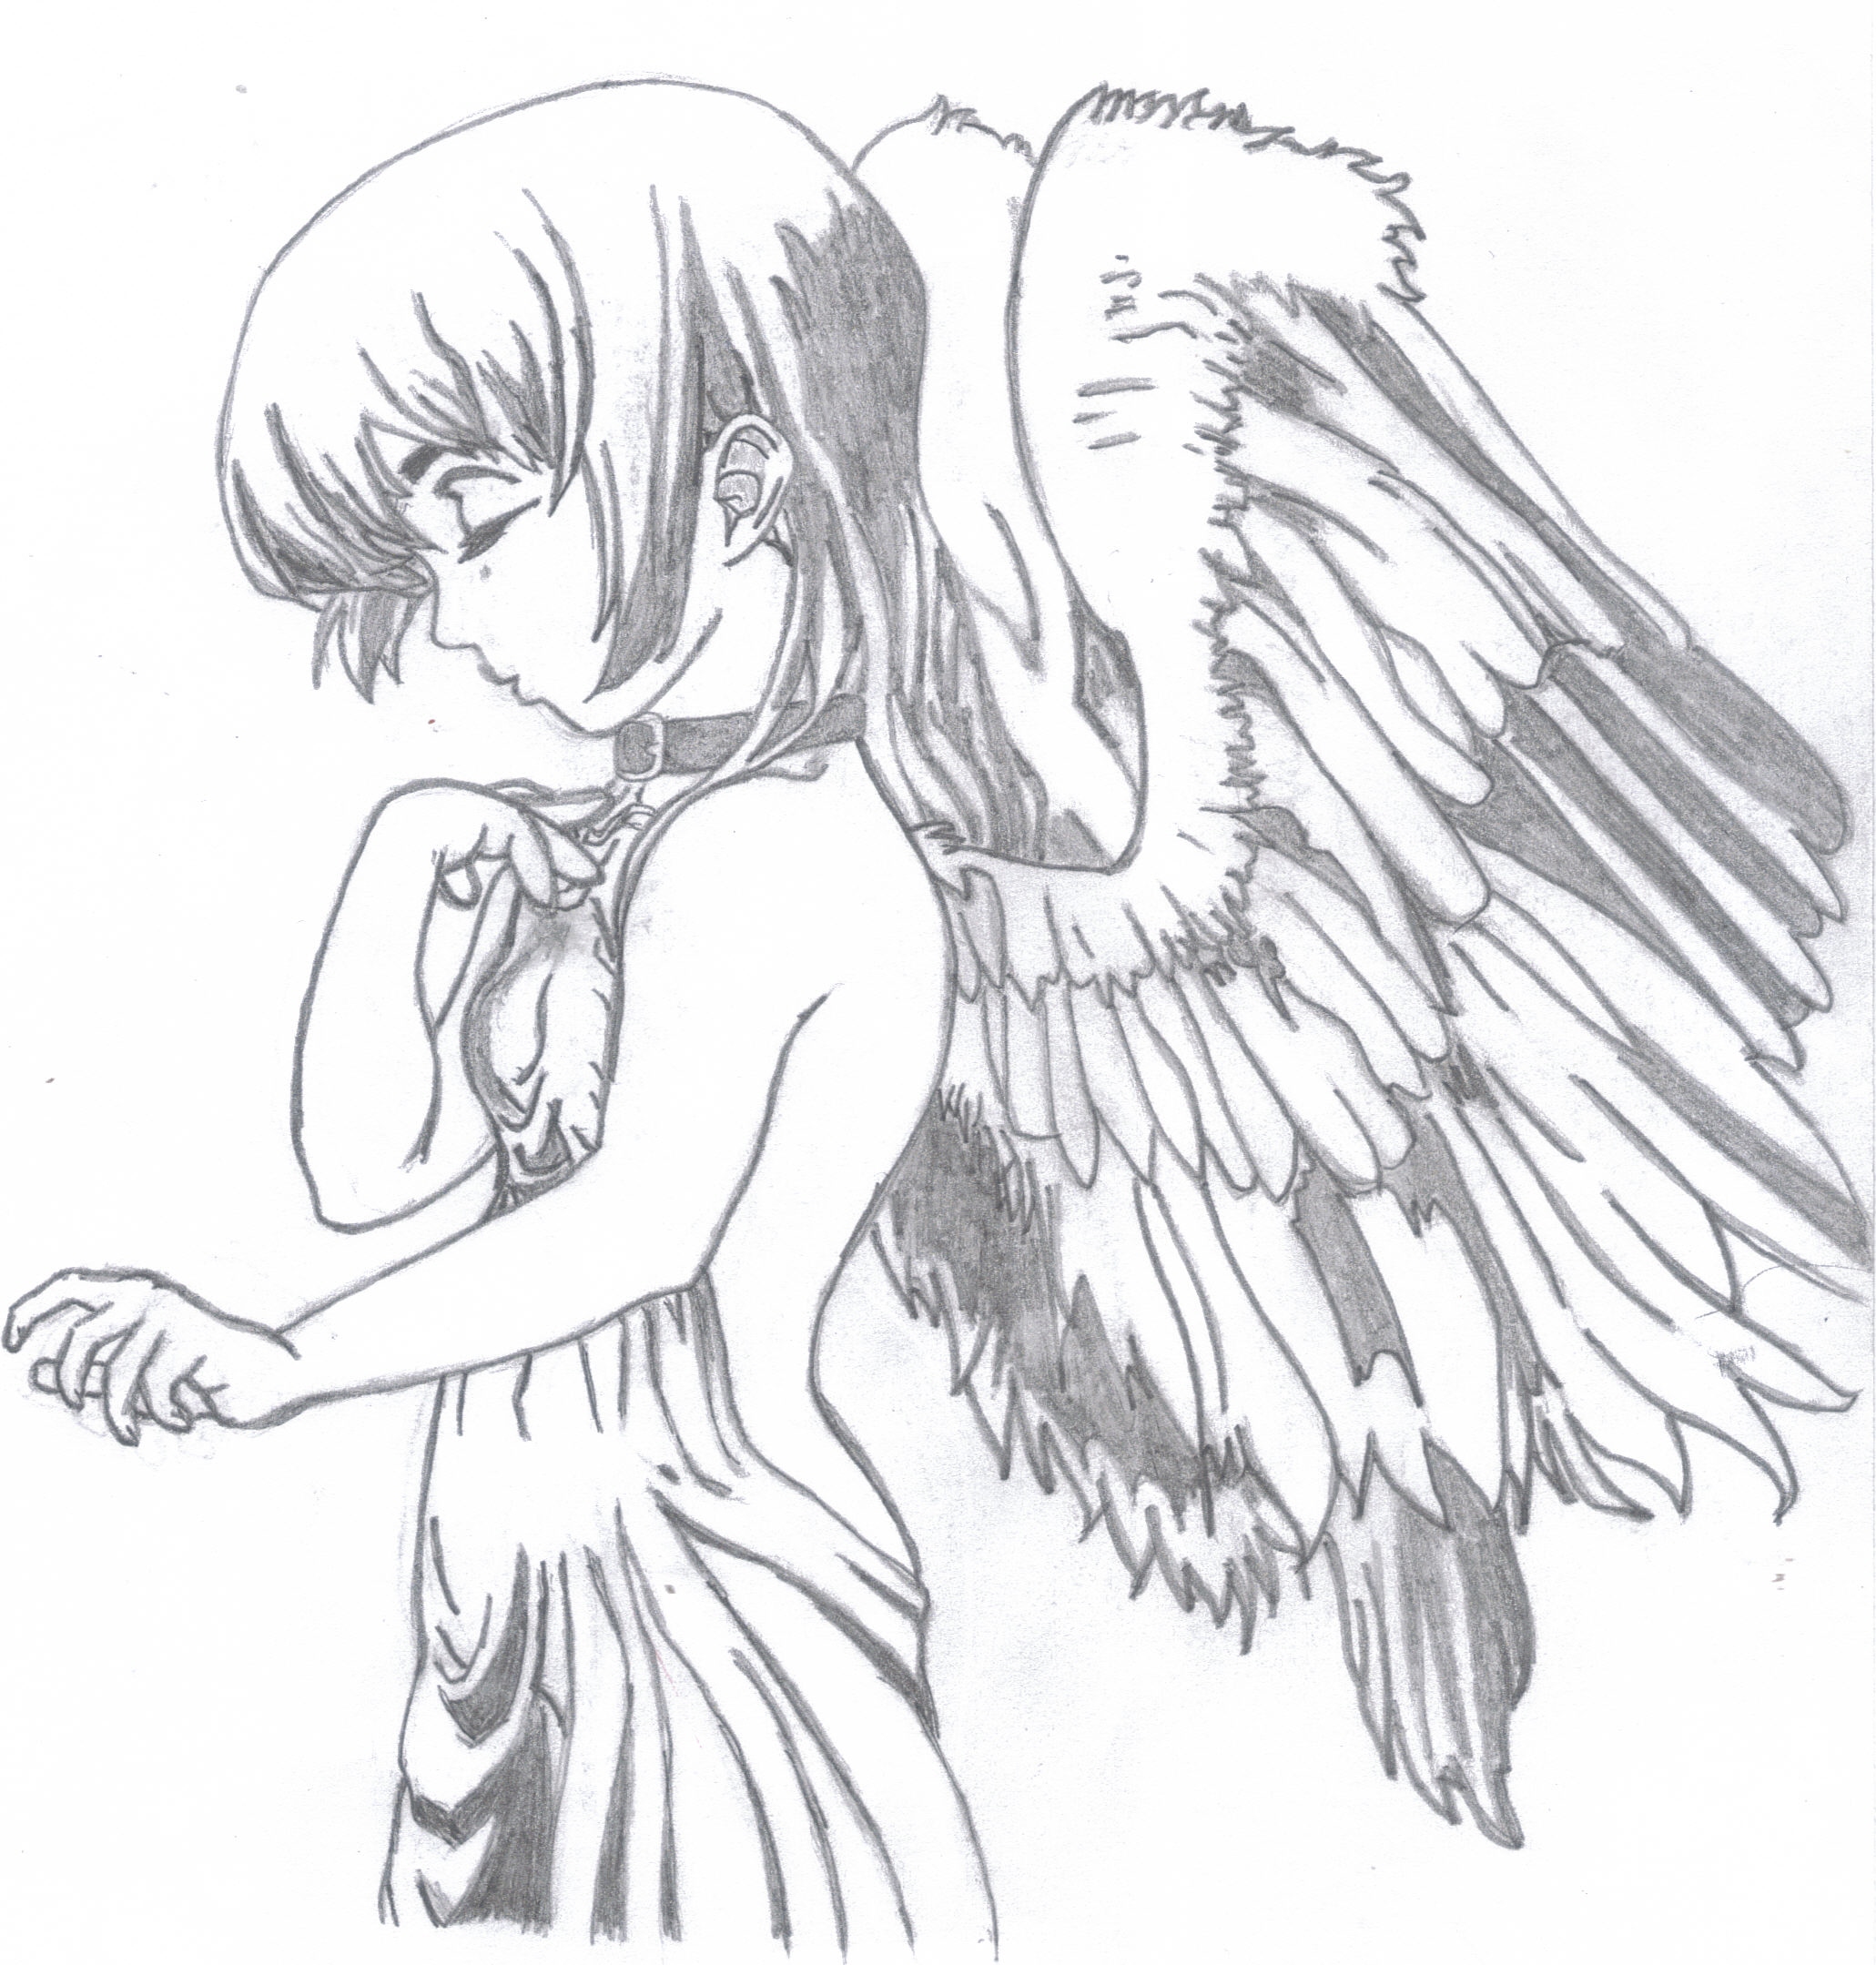 Ashurrr on Twitter Anxiety angel eyes dark anime boy art  drawing madness stars monster httpstcoowOibJIyKe  X